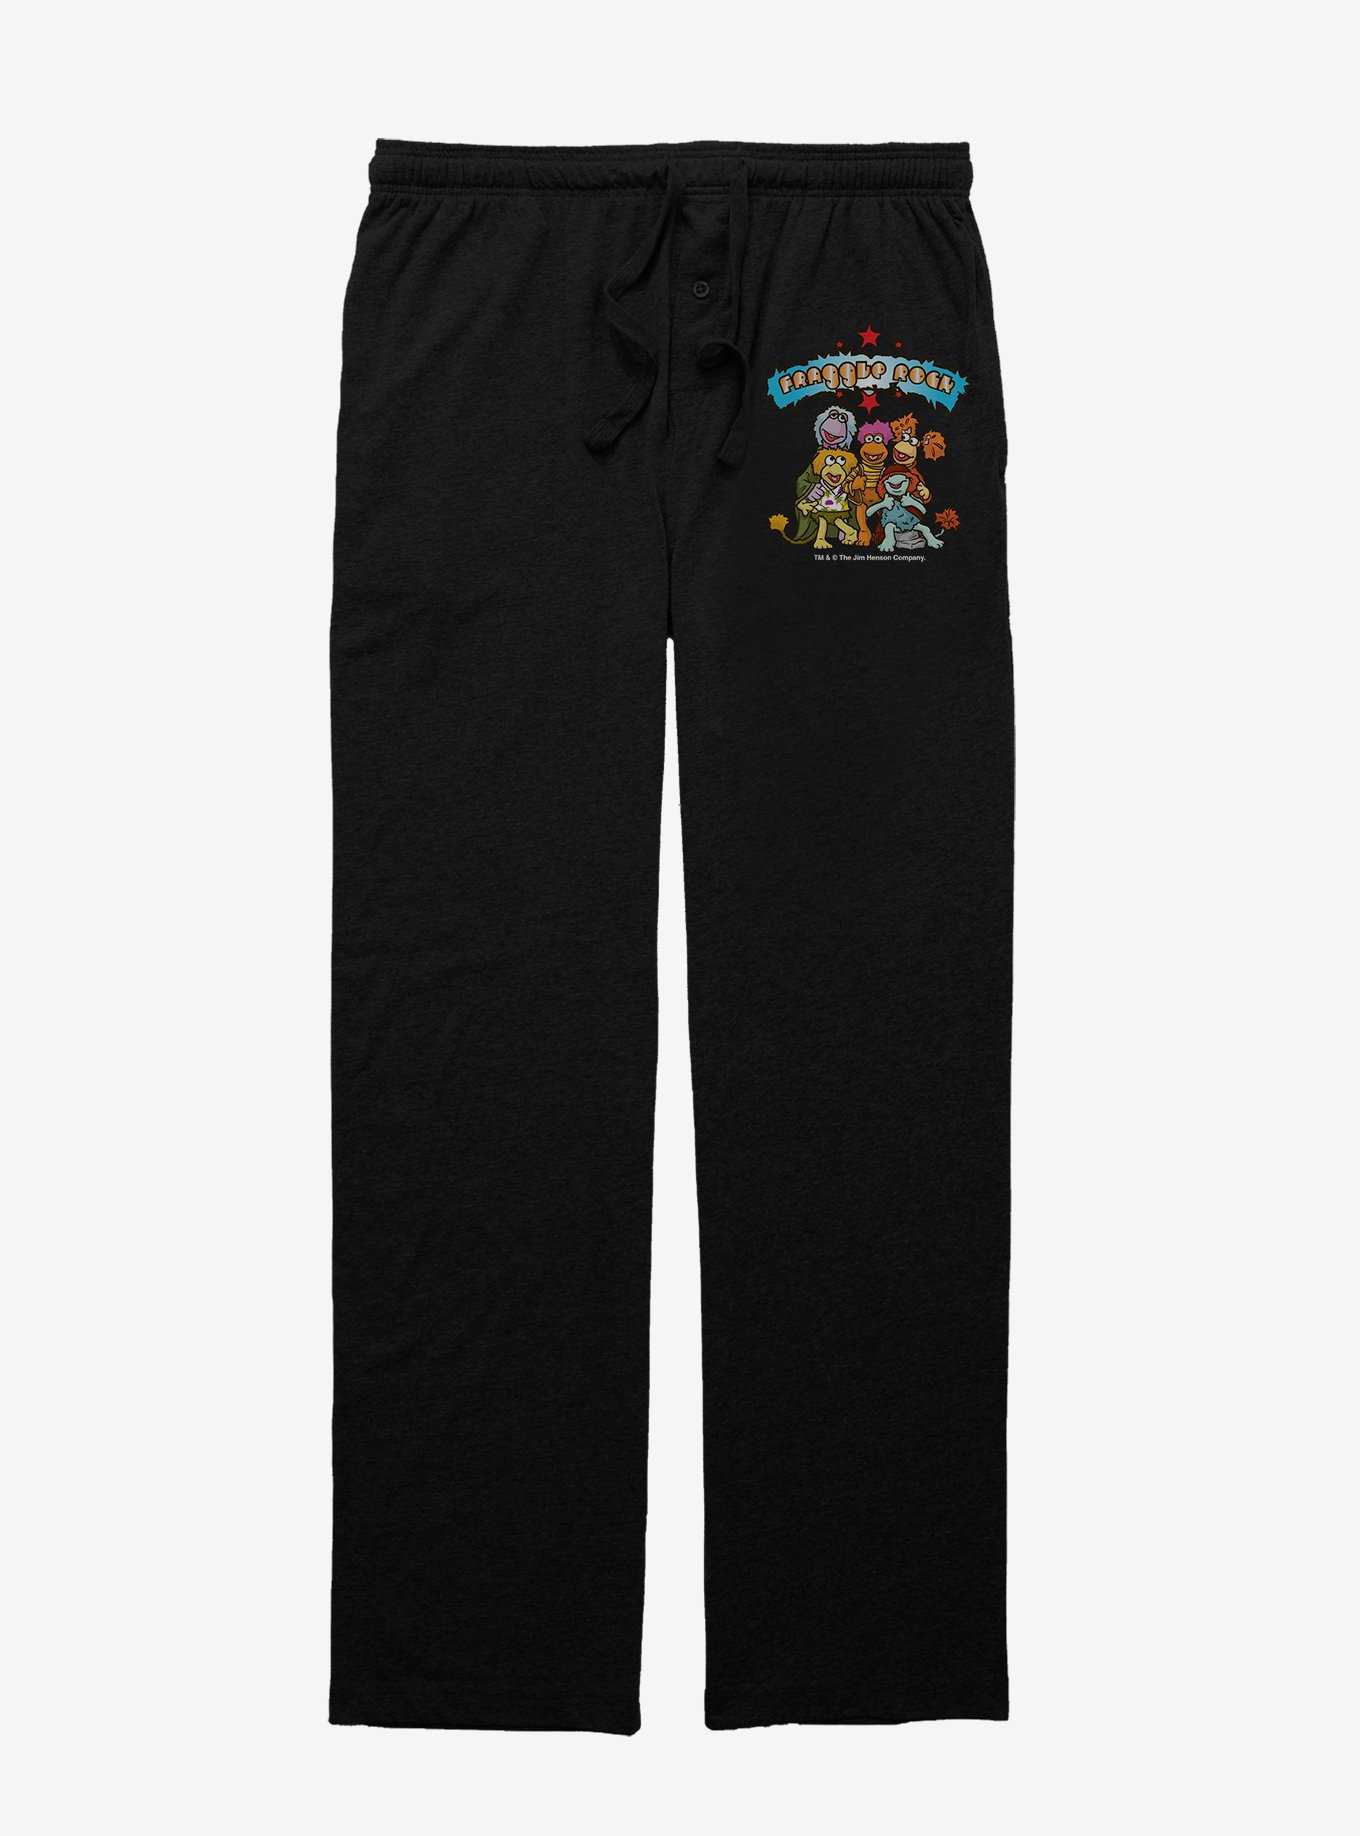 Jim Henson's Fraggle Rock Fraggle Rock Team Pajama Pants, , hi-res